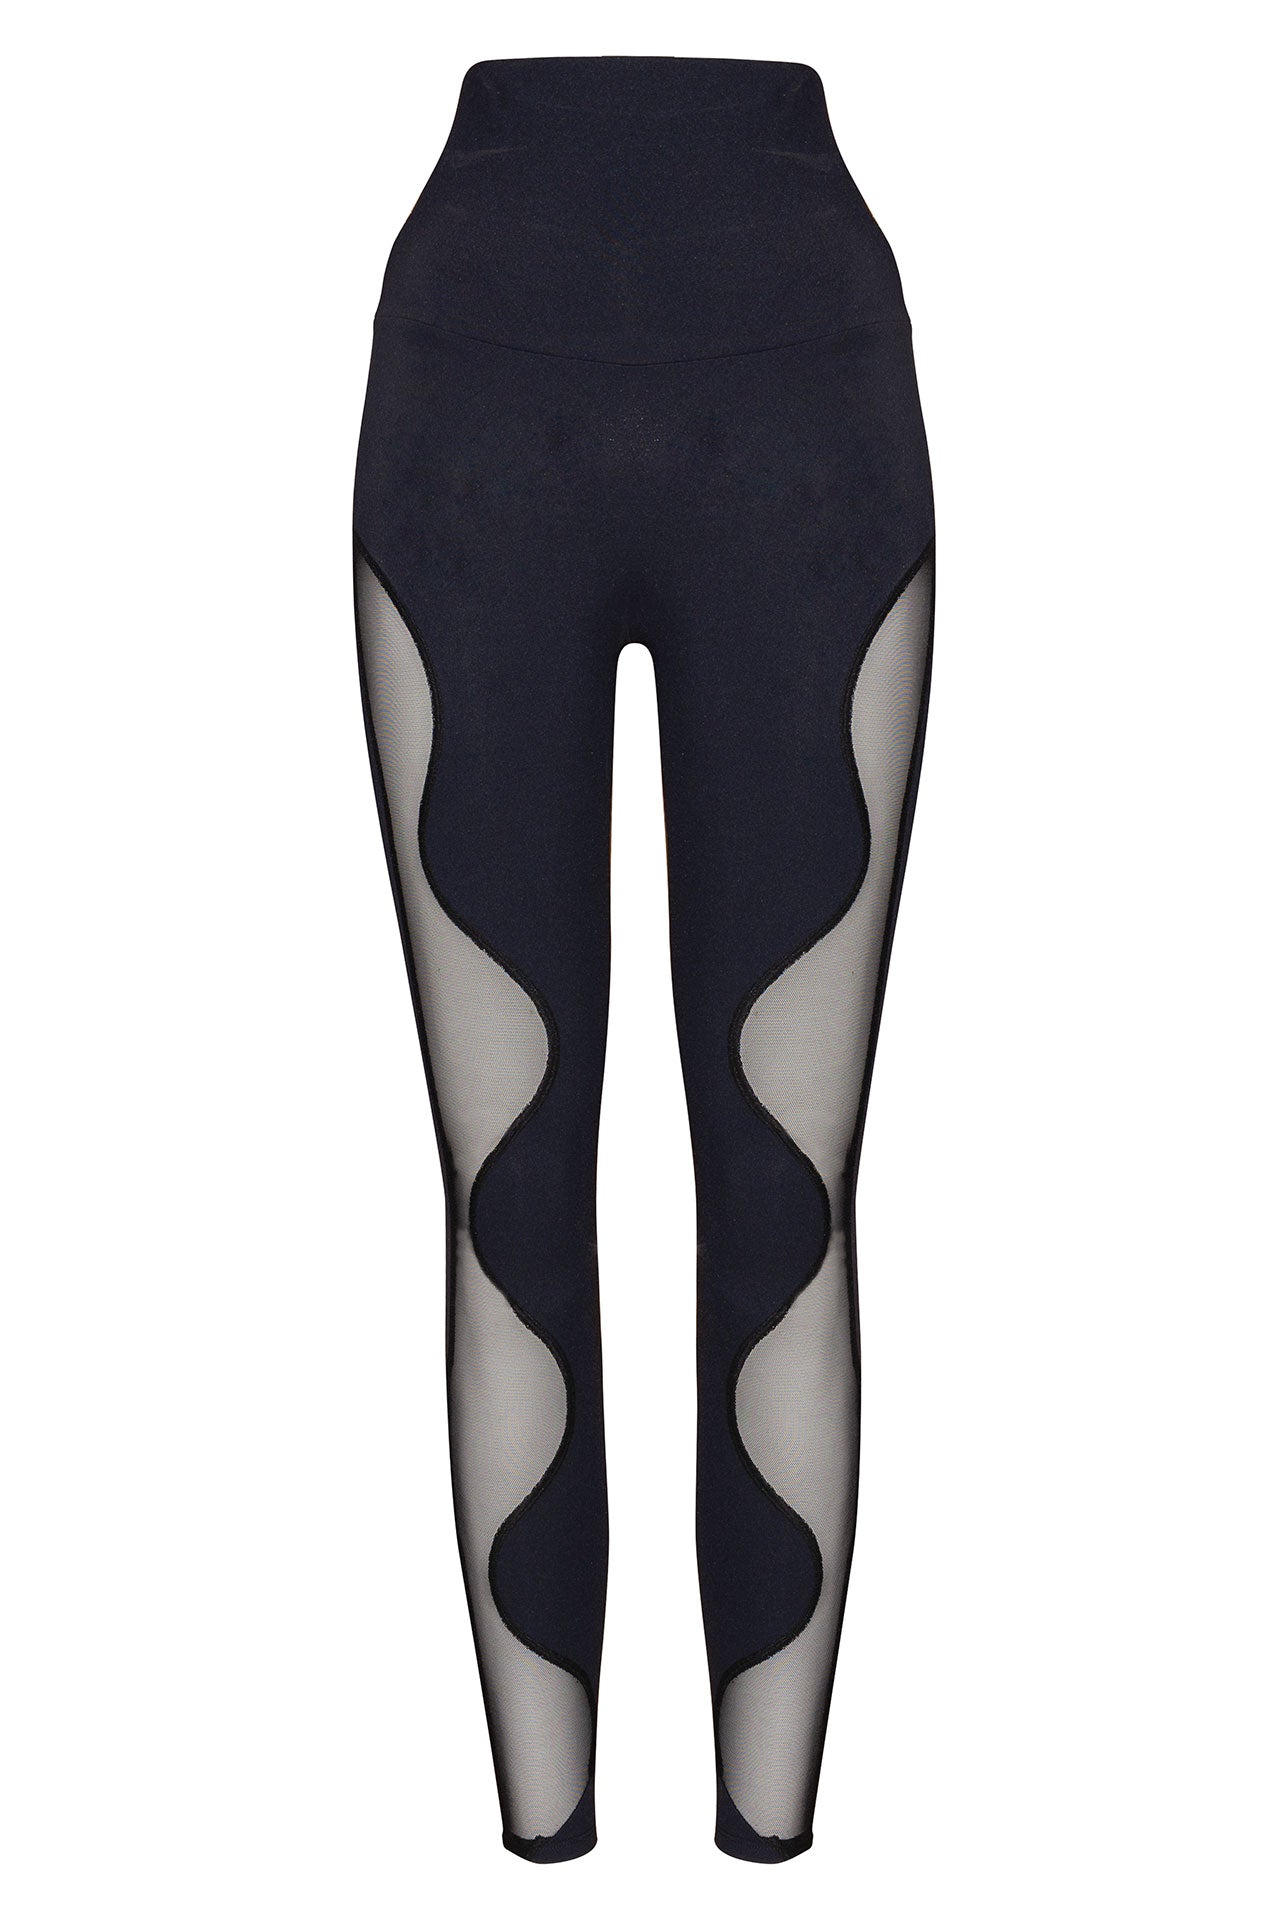 Black mesh side leggings – Rype Curves